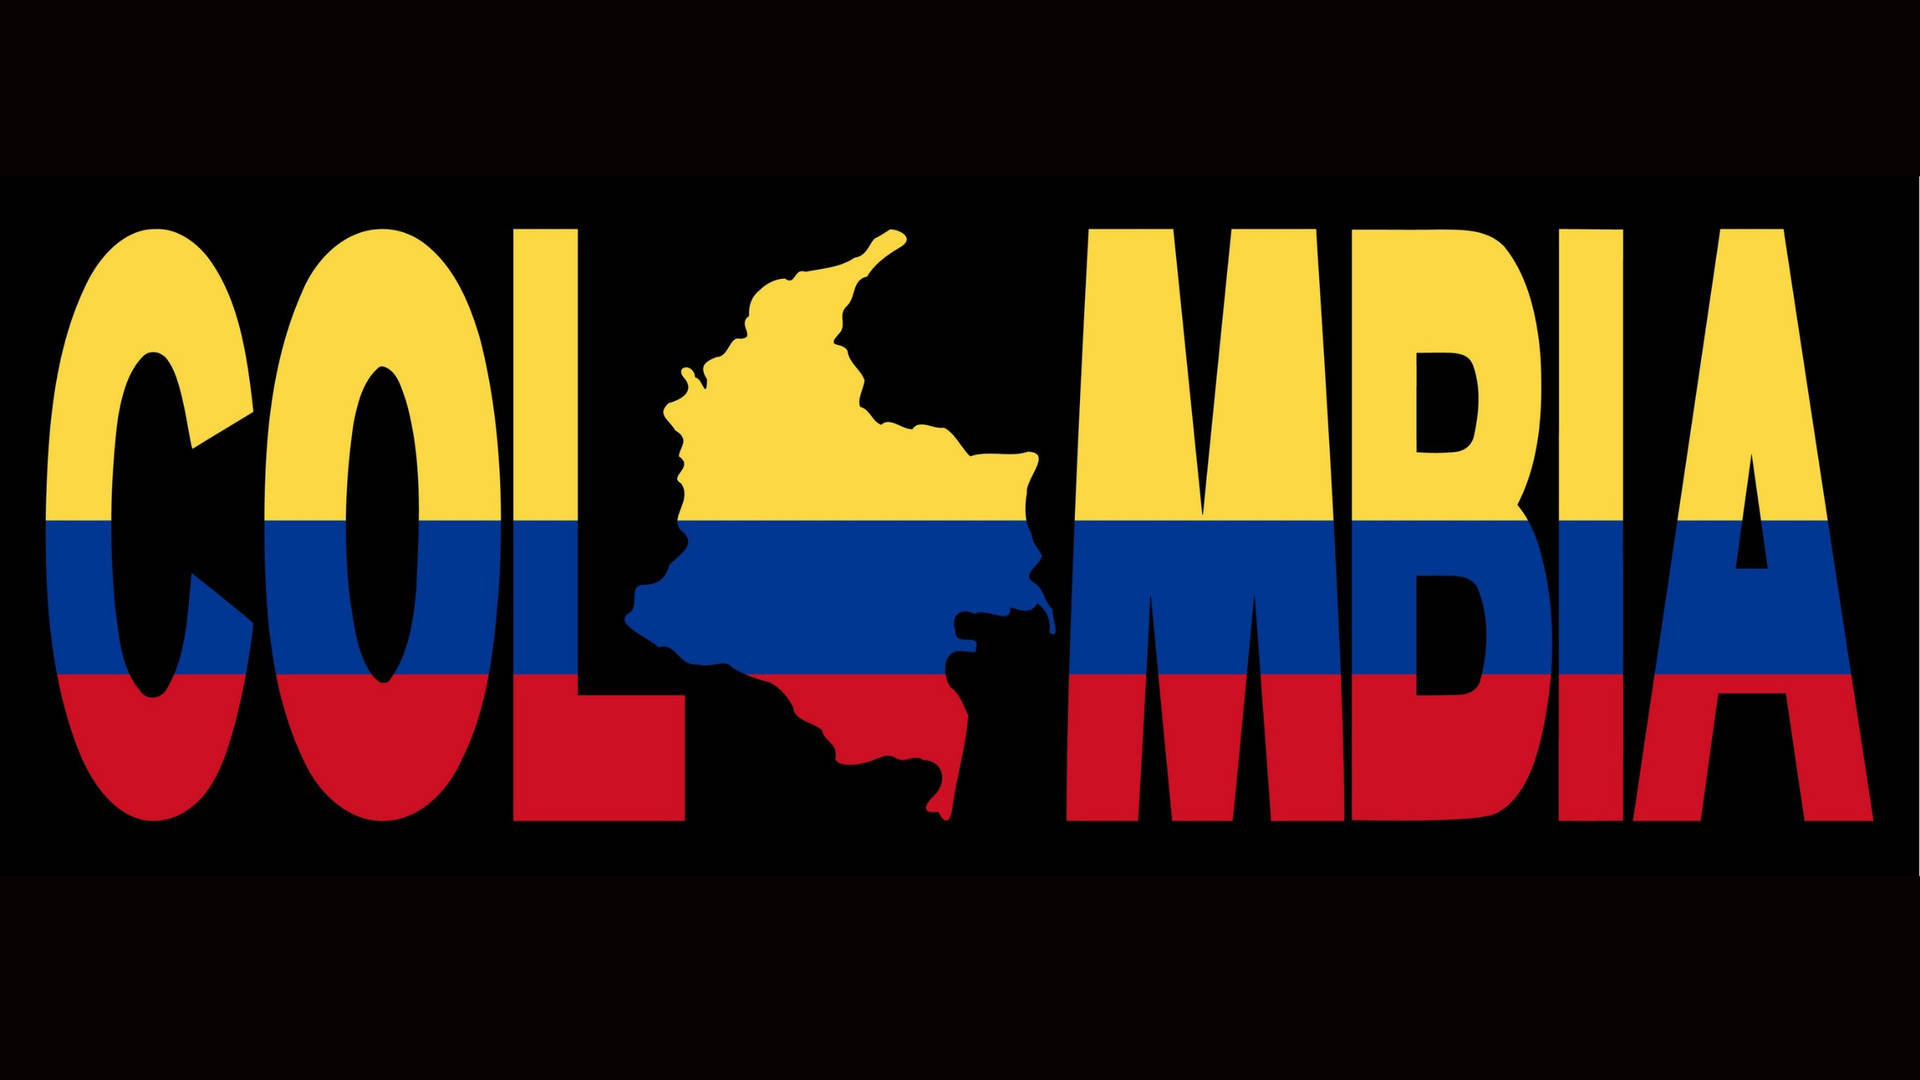 Colombia Flag Og Kort Wallpaper